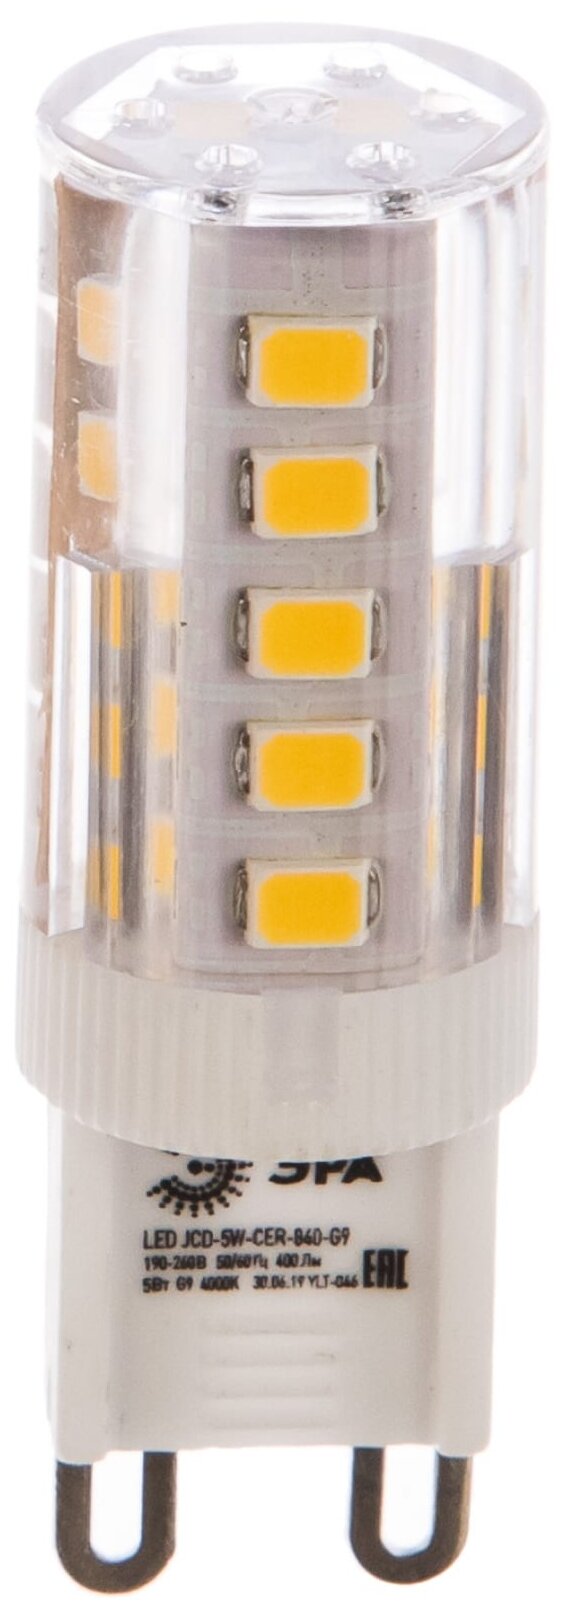 ЭРА LED JCD-5W-CER-840-G9 (диод, капсула, 5Вт, нейтр, G9) - фотография № 2